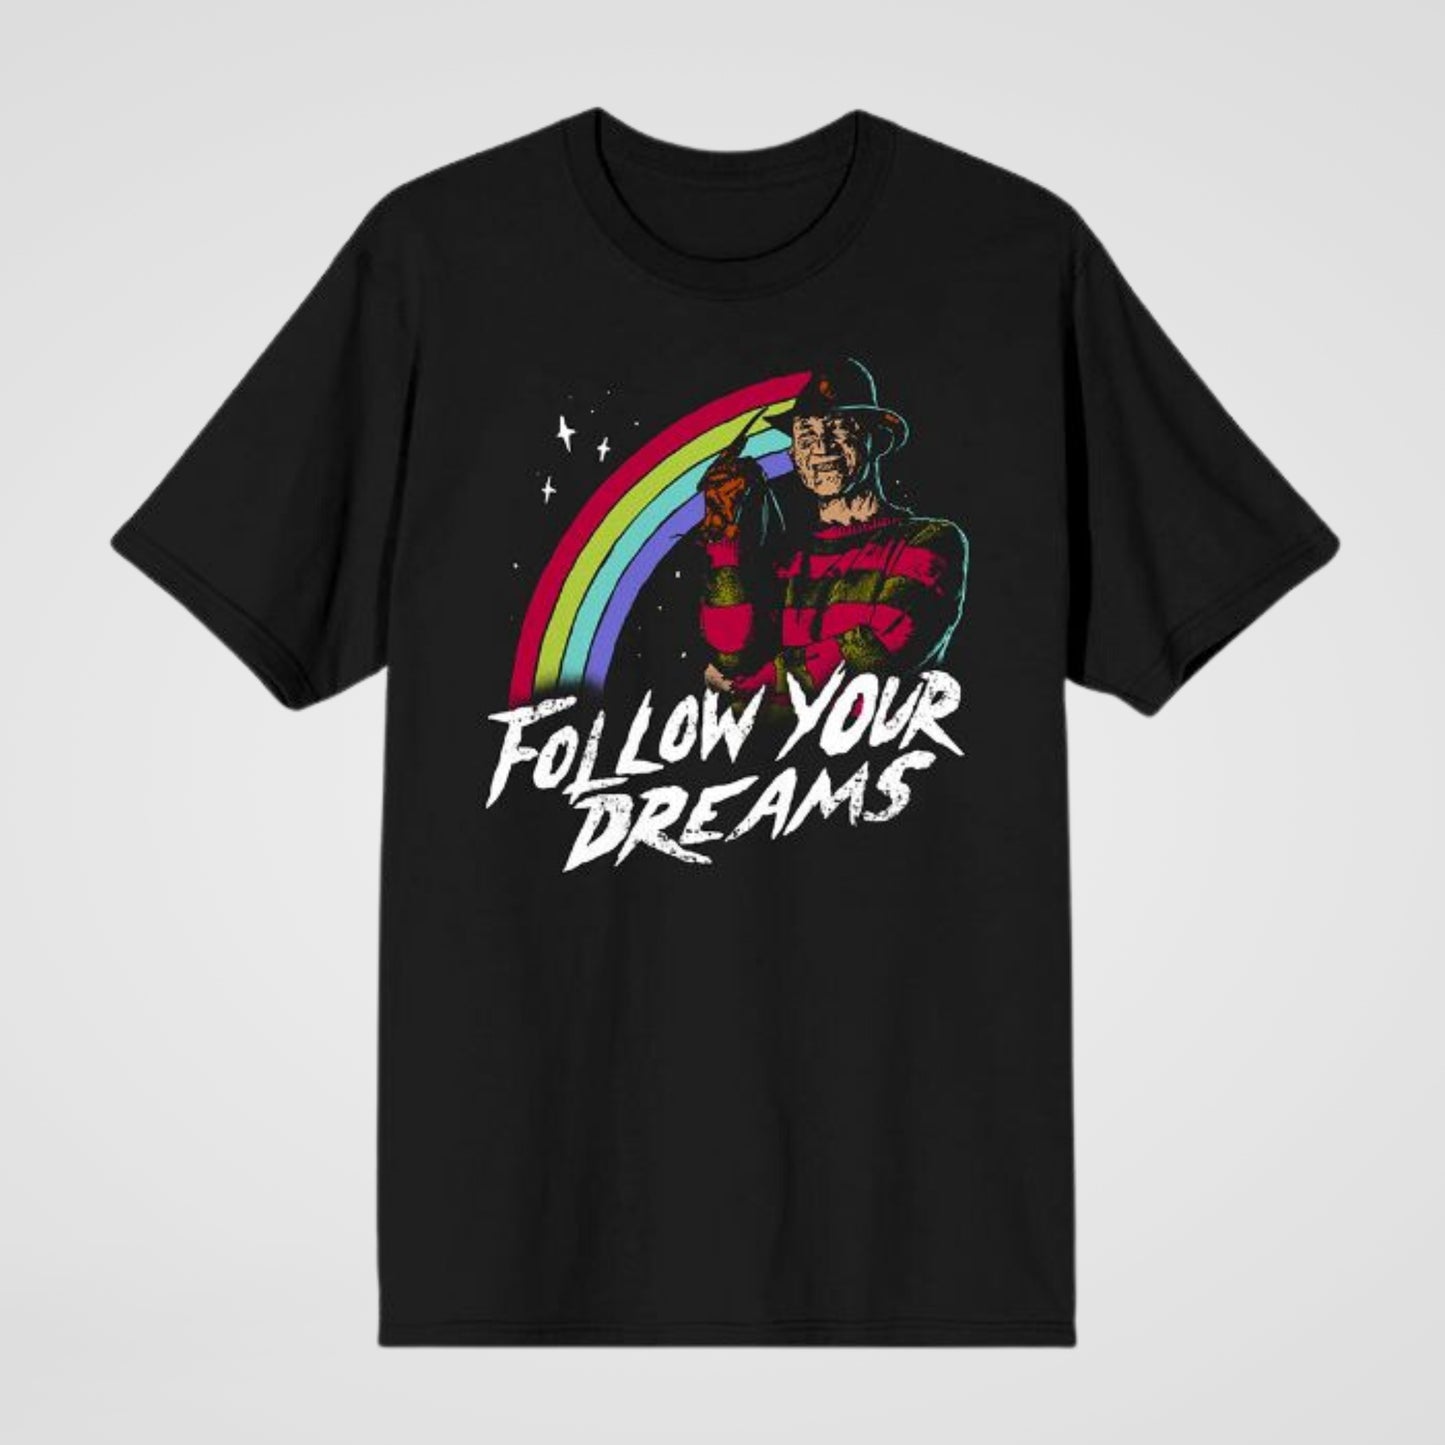 Freddy Krueger Rainbow "Follow Your Dreams" Nightmare on Elm Street Unisex Shirt